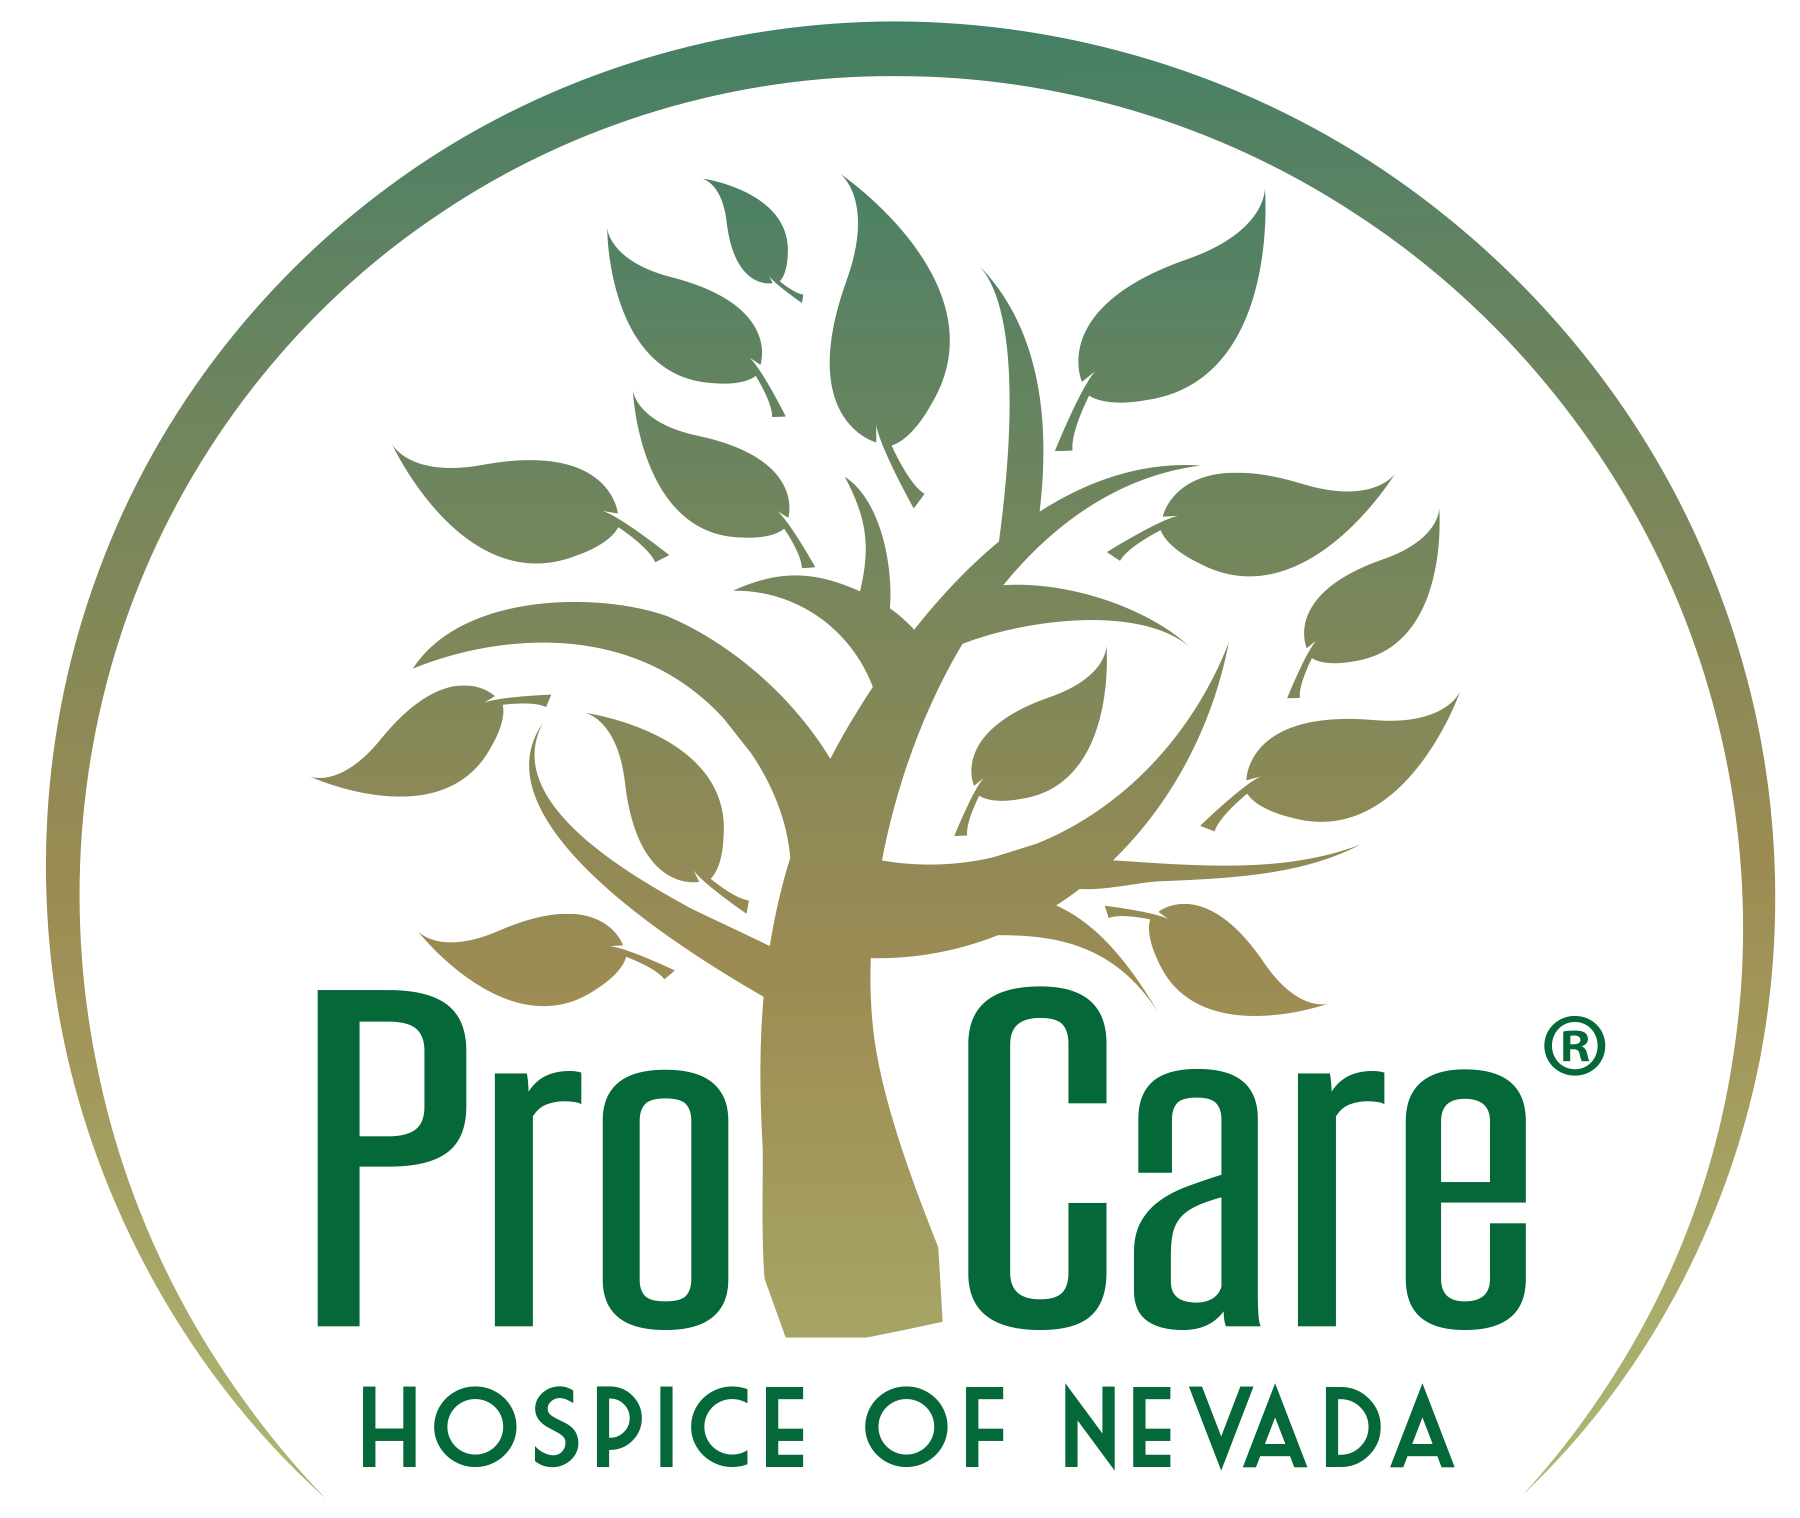 ProCare Hospice of Nevada